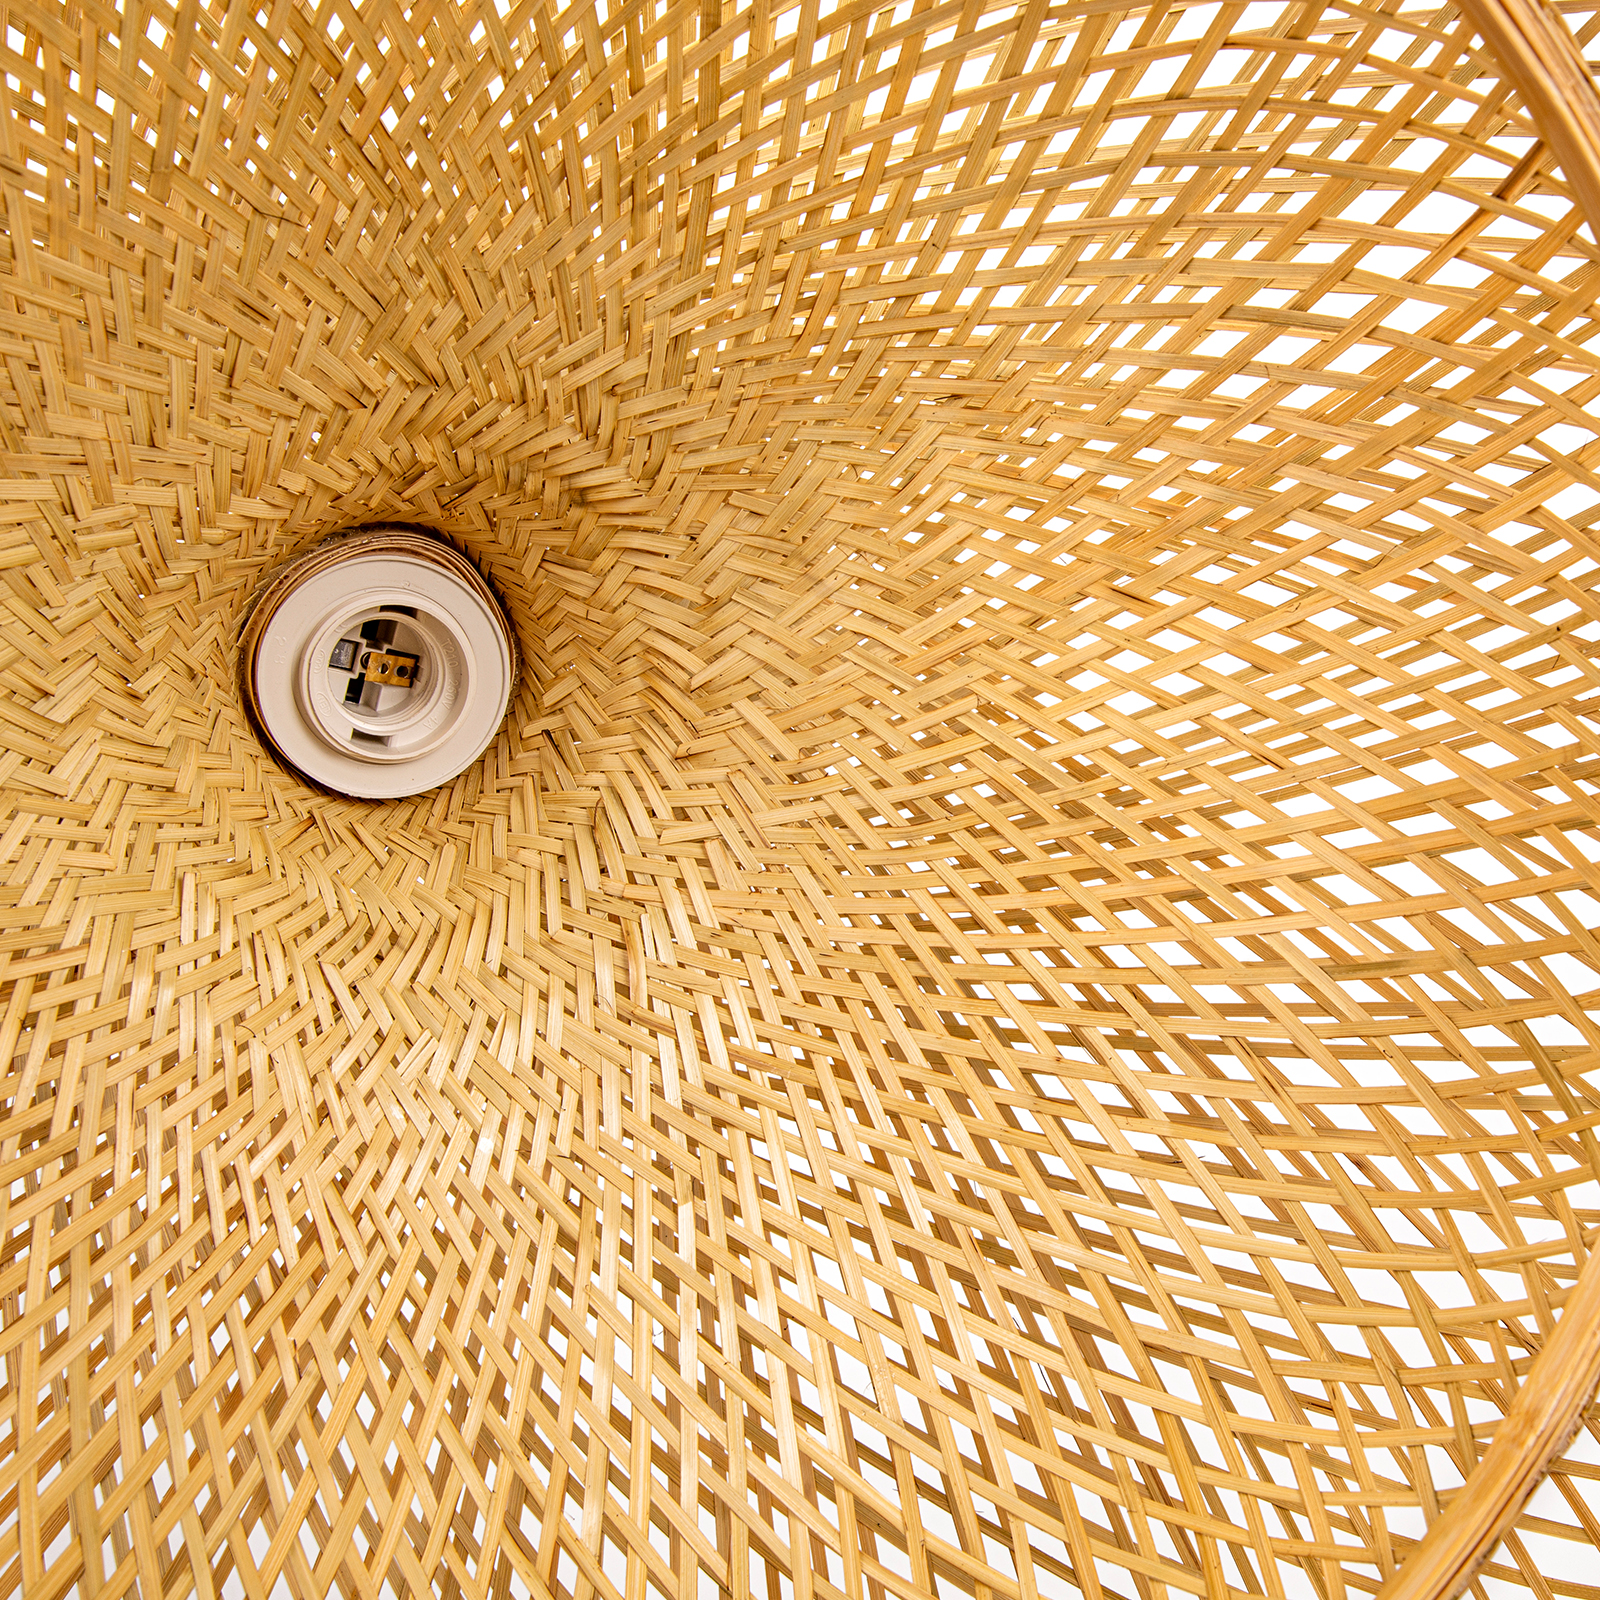 Asian Decor Bamboo Handmade Woven Hanging Lights Pendant Lamp